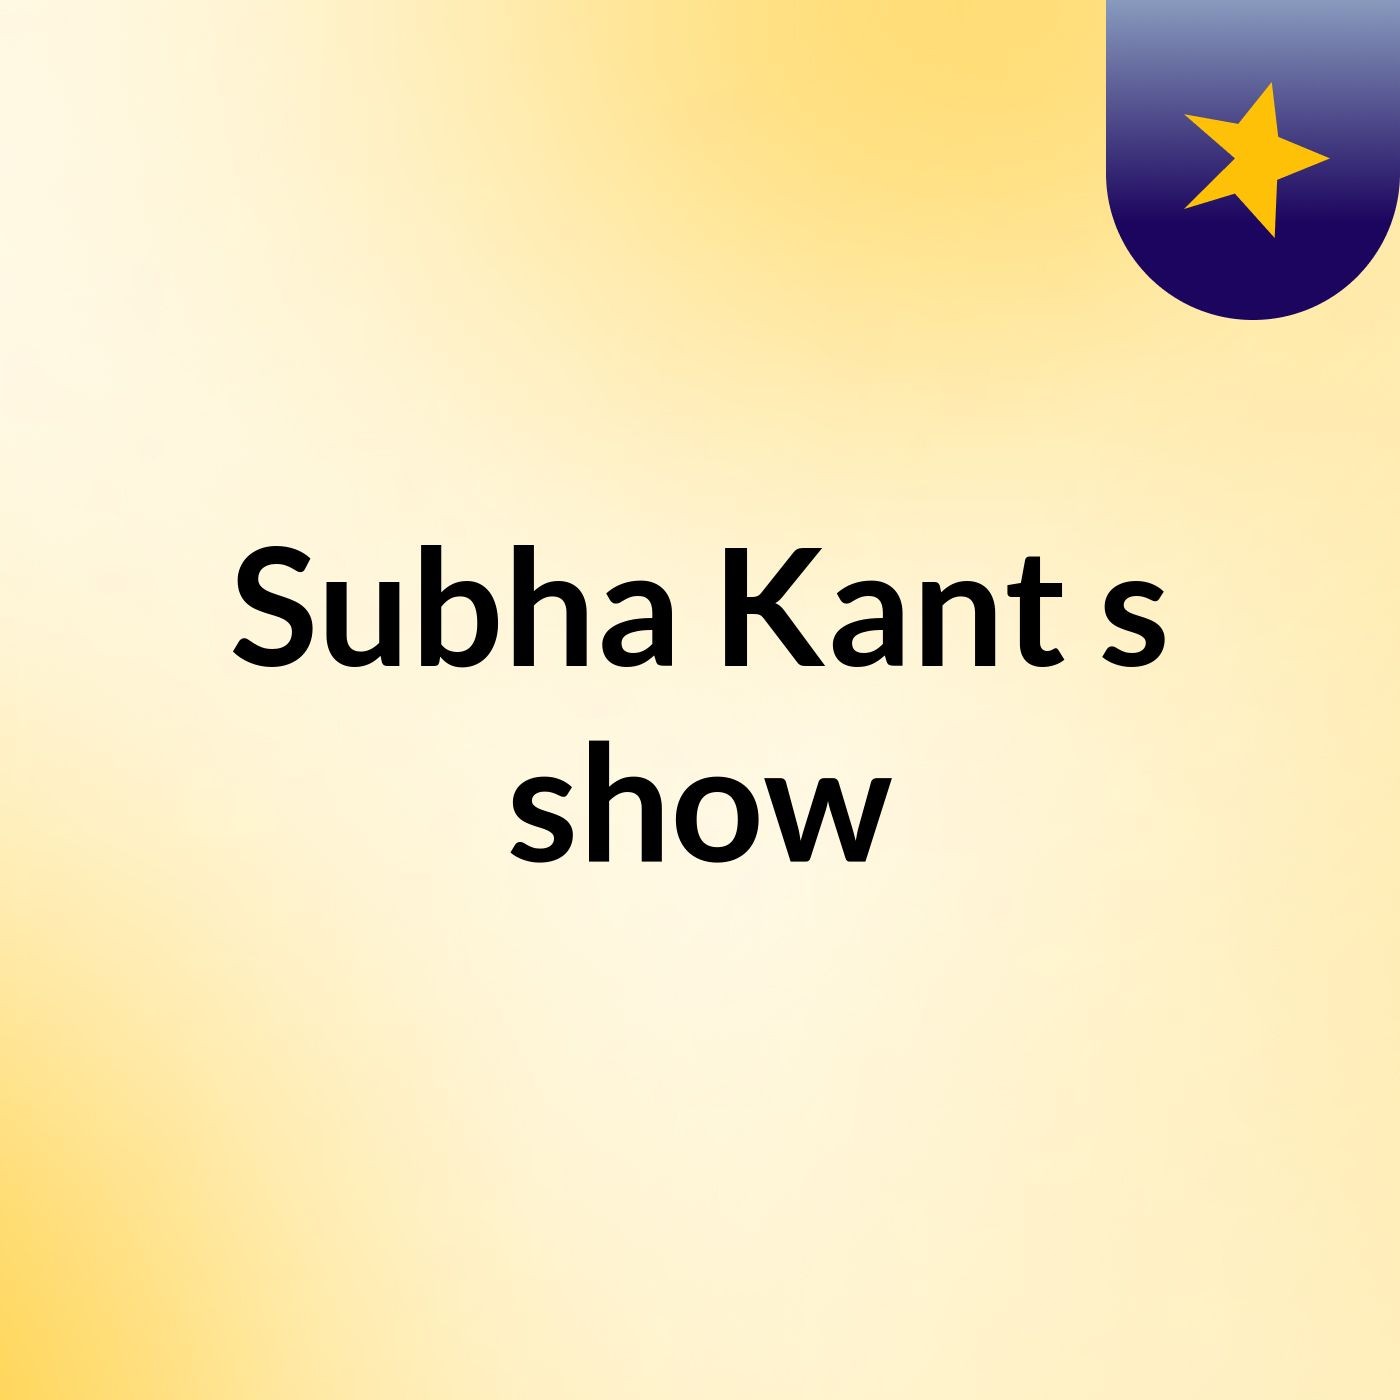 Subha Kant's show